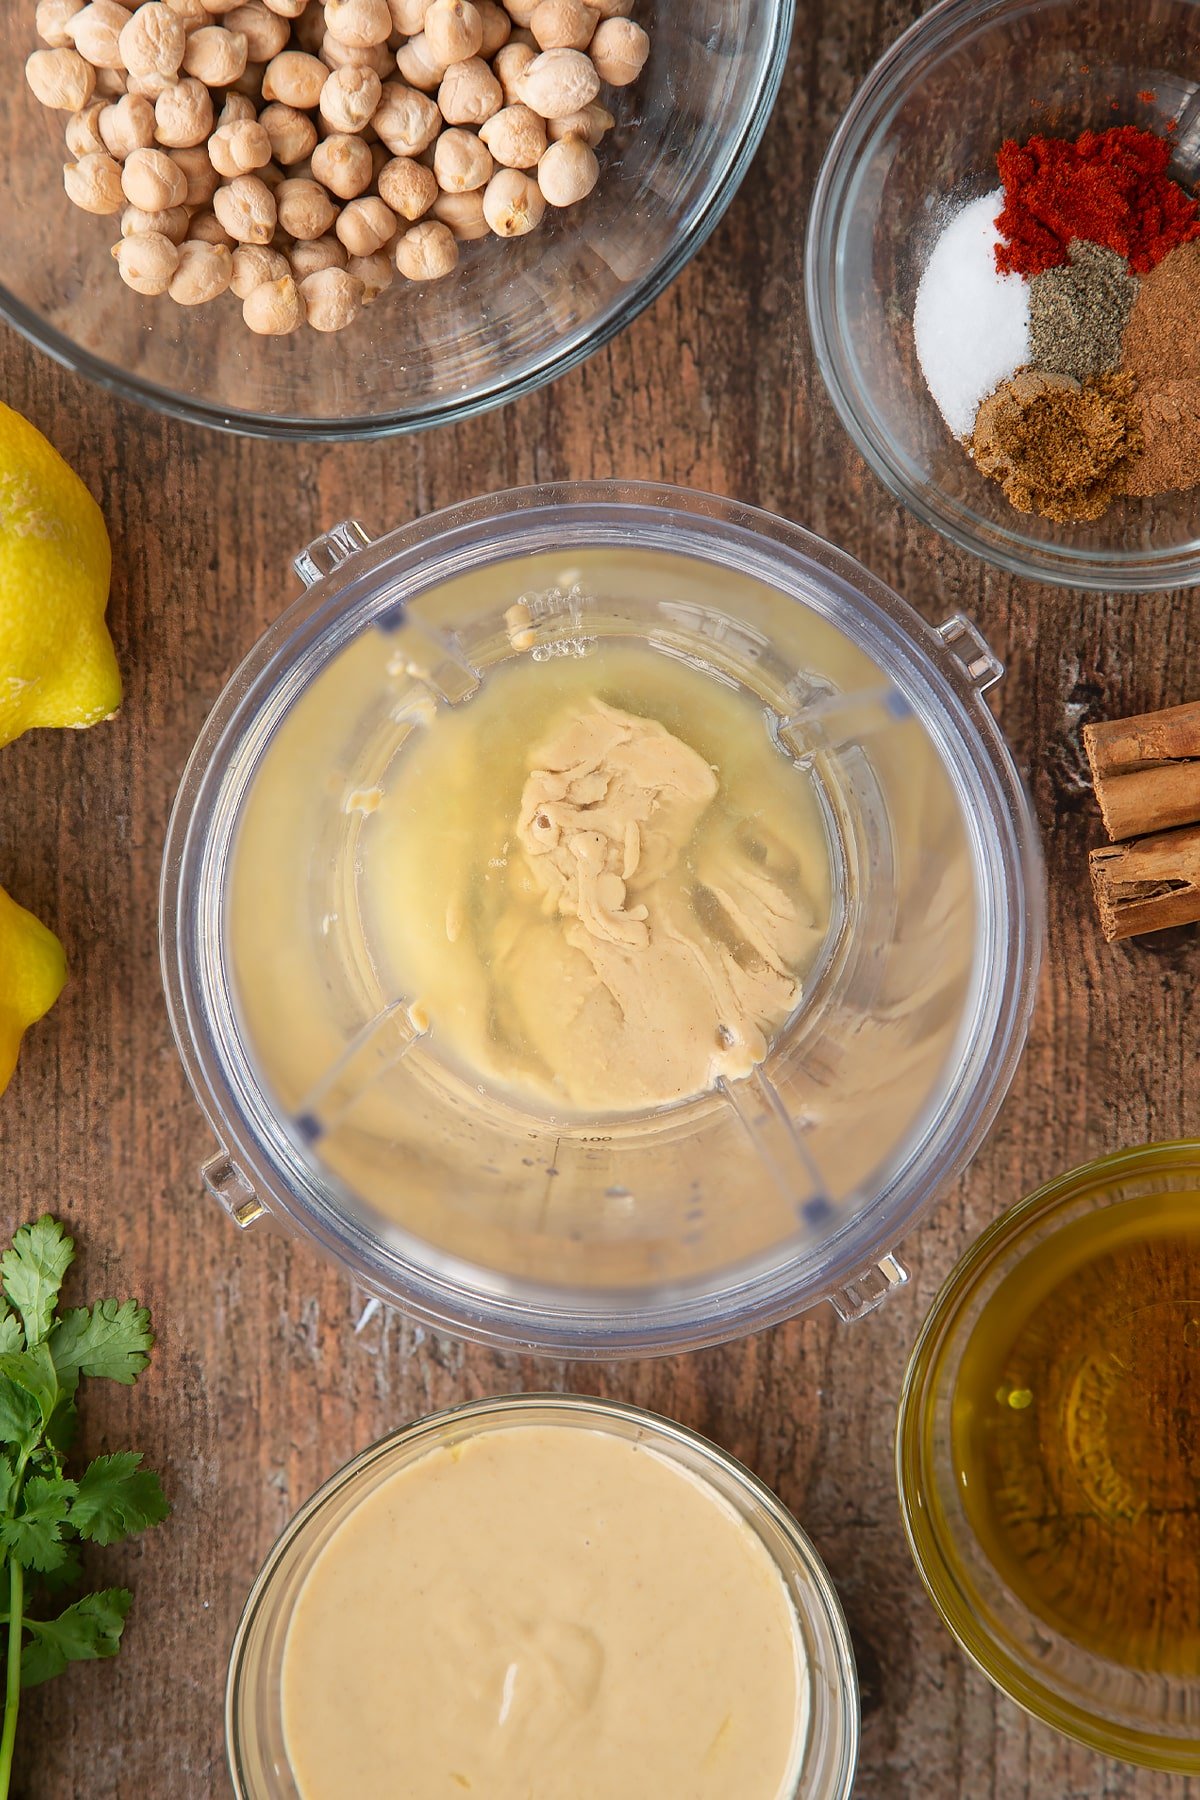 Tahini and lemon juice in a small blender bowl. Ingredients to make cinnamon hummus surround the bowl.